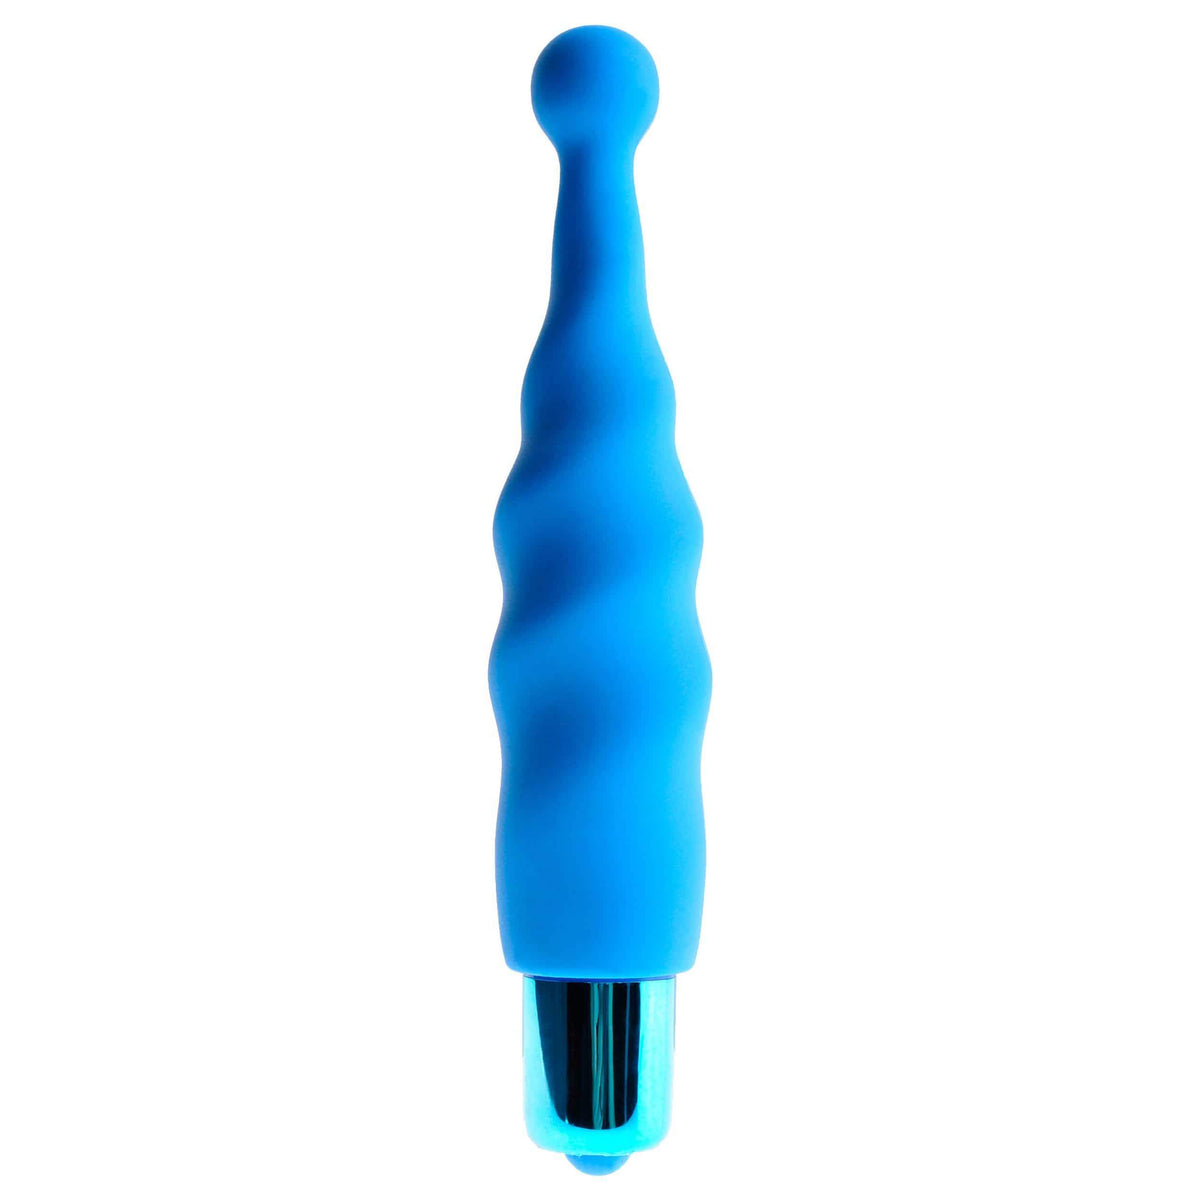 Pipedream - Classix Silicone Fun Bullet Vibrator (Blue) PD1782 CherryAffairs